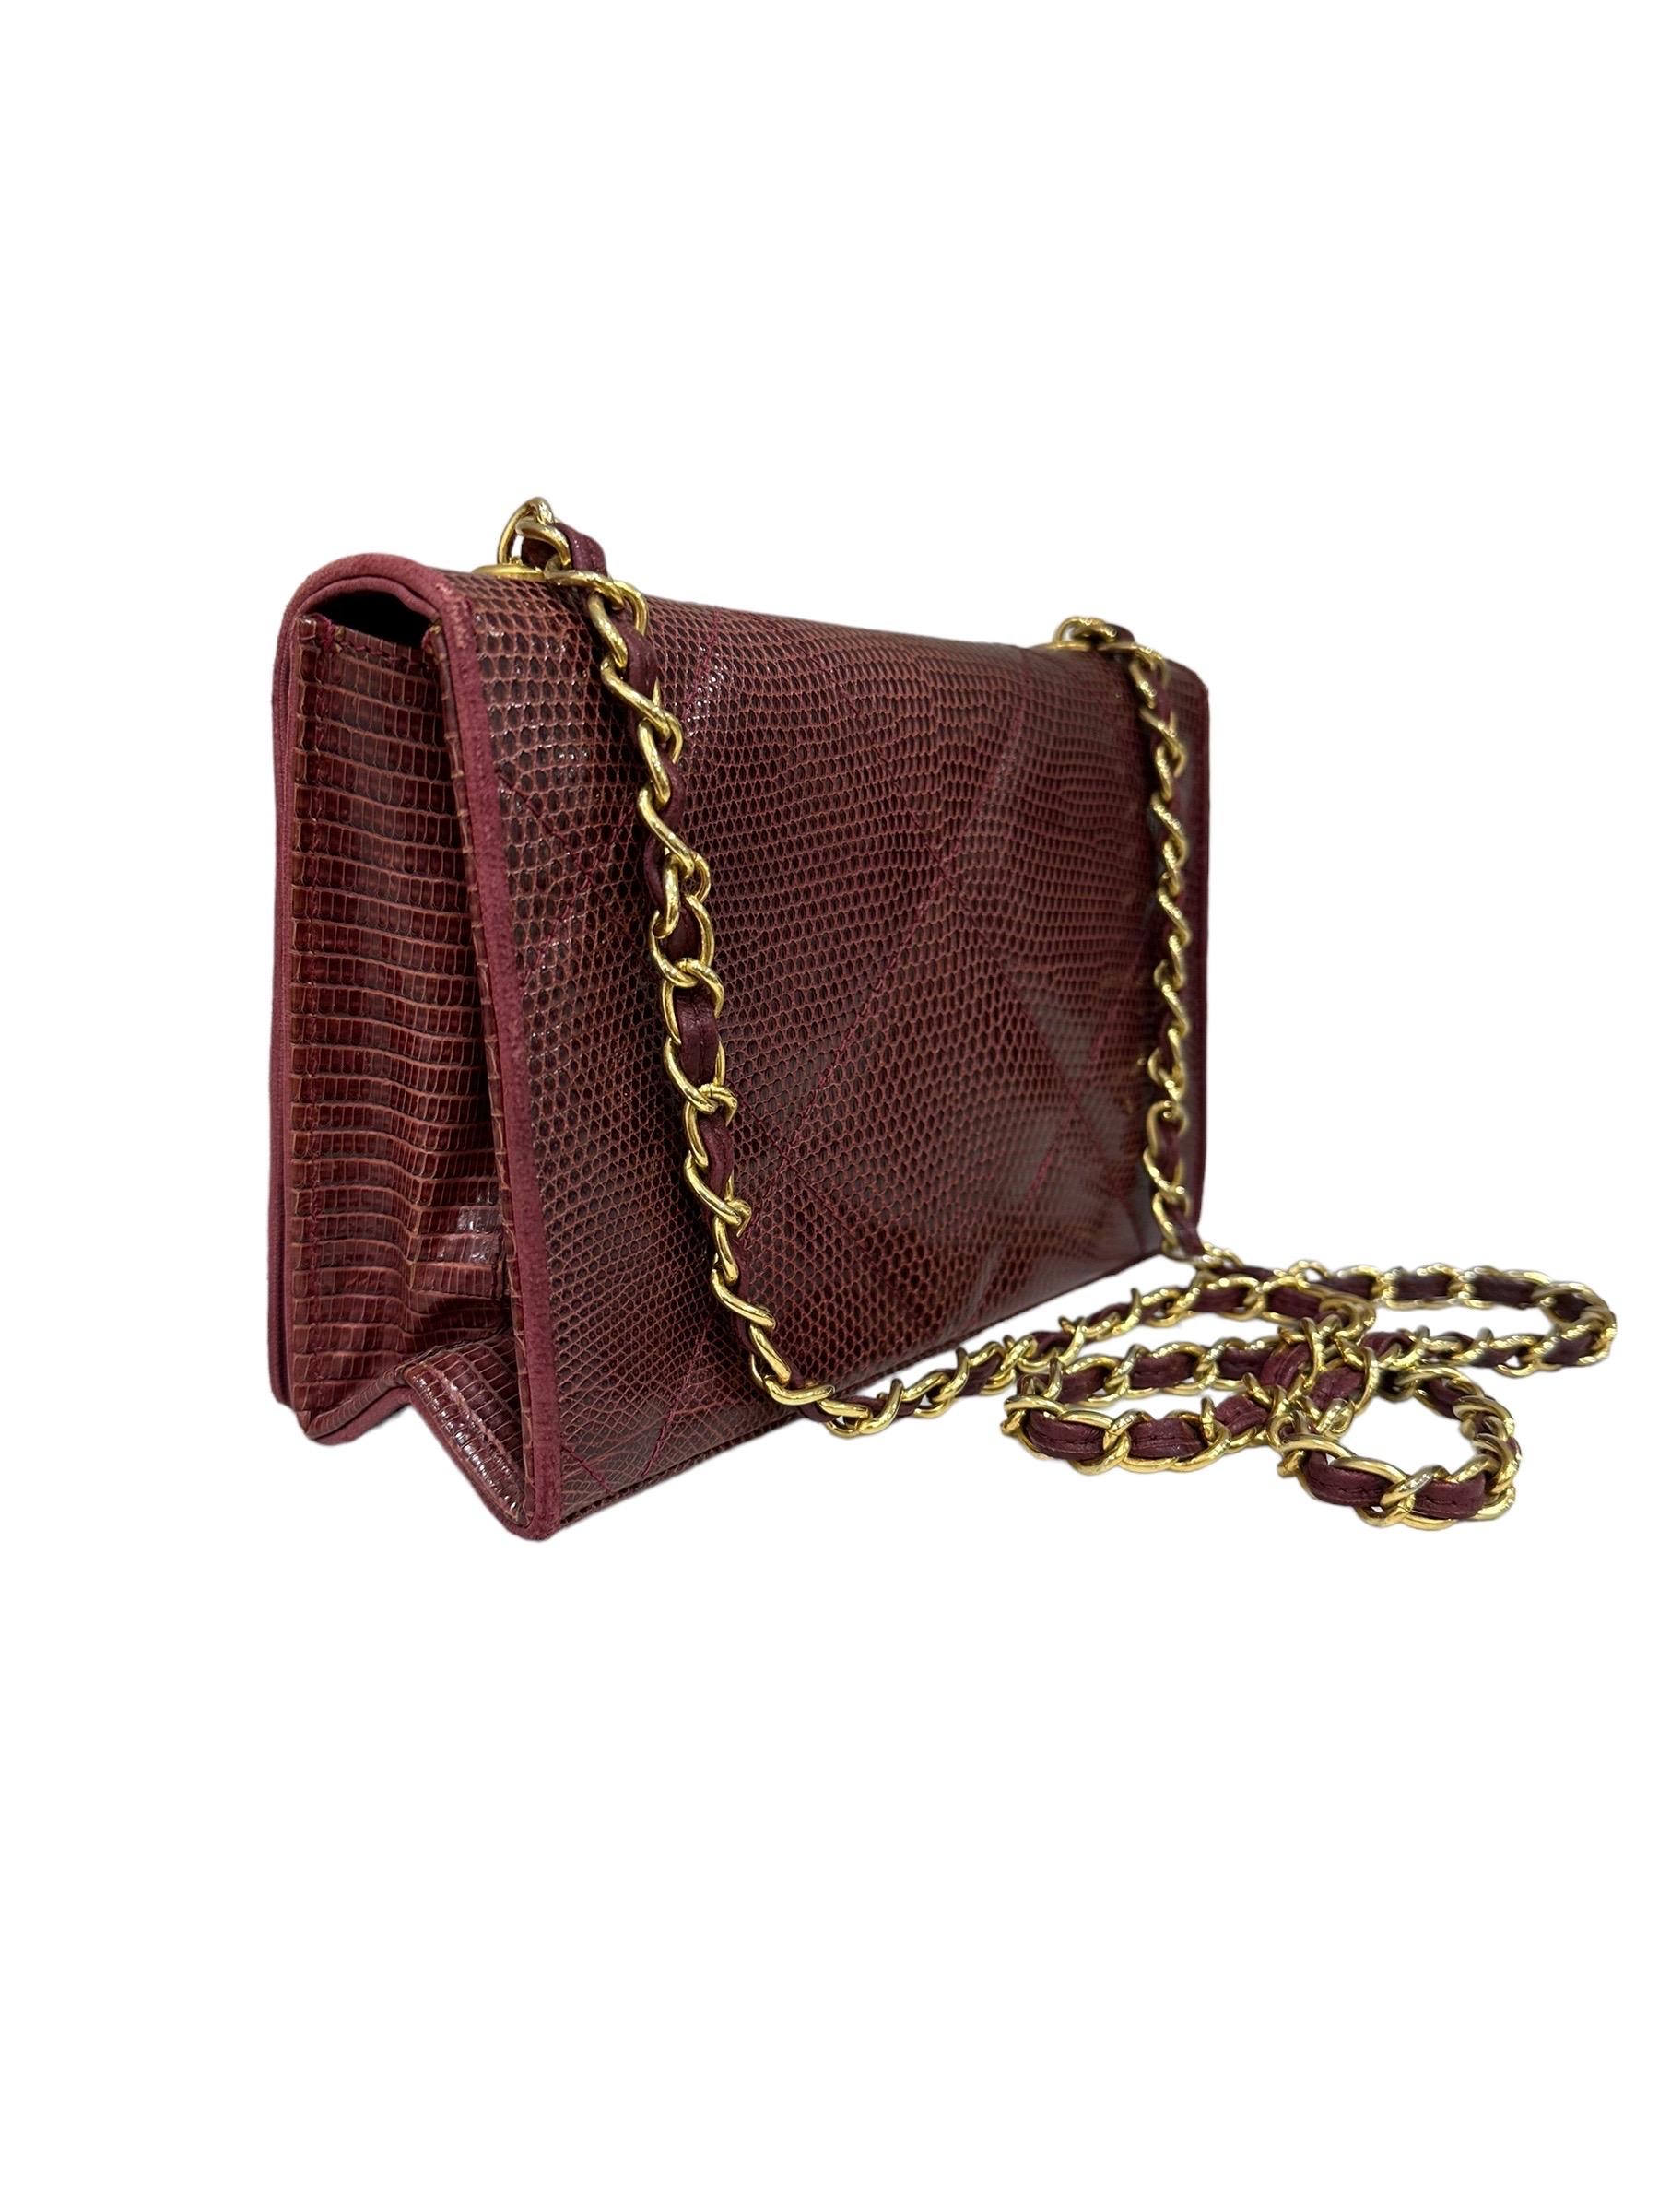 1988 Chanel Bordeaux Leather Shoulder Vintage Bag In Good Condition For Sale In Torre Del Greco, IT